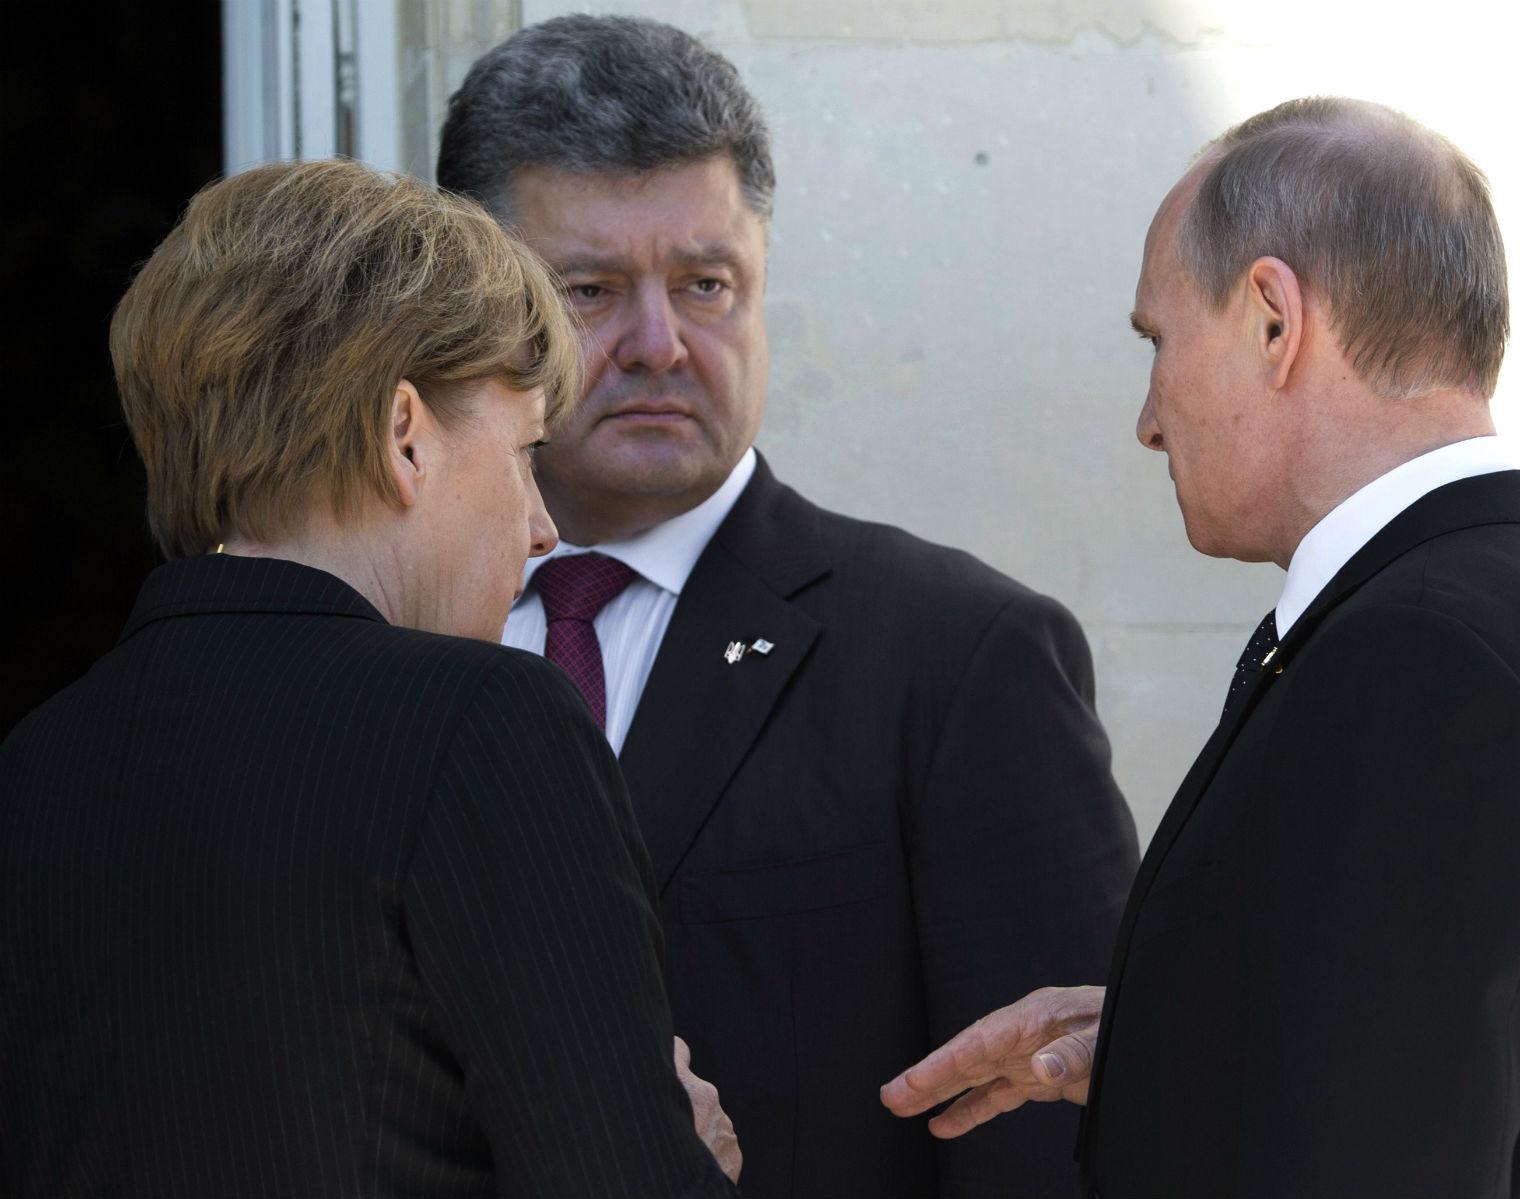 Former German chancellor Angela Merkel mediates a tense meeting between then-Ukrainian president Petro Poroshenko and Vladimir Putin at a D-Day commemoration in 2014